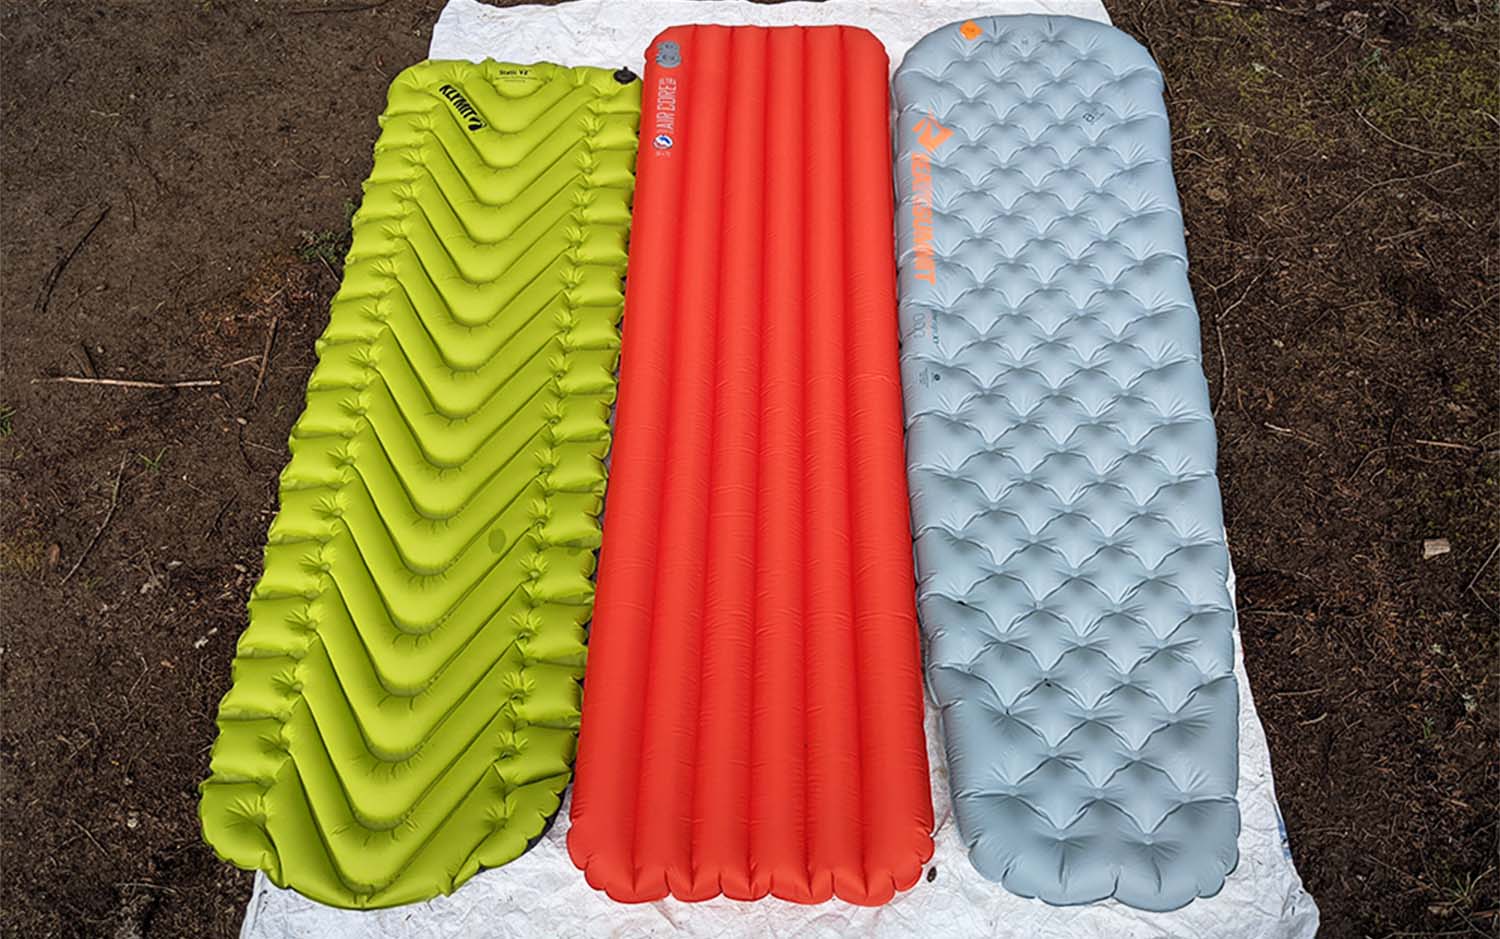 Best Foam Sleeping Pad In 2023 - Top 10 Foam Sleeping Pads Review 